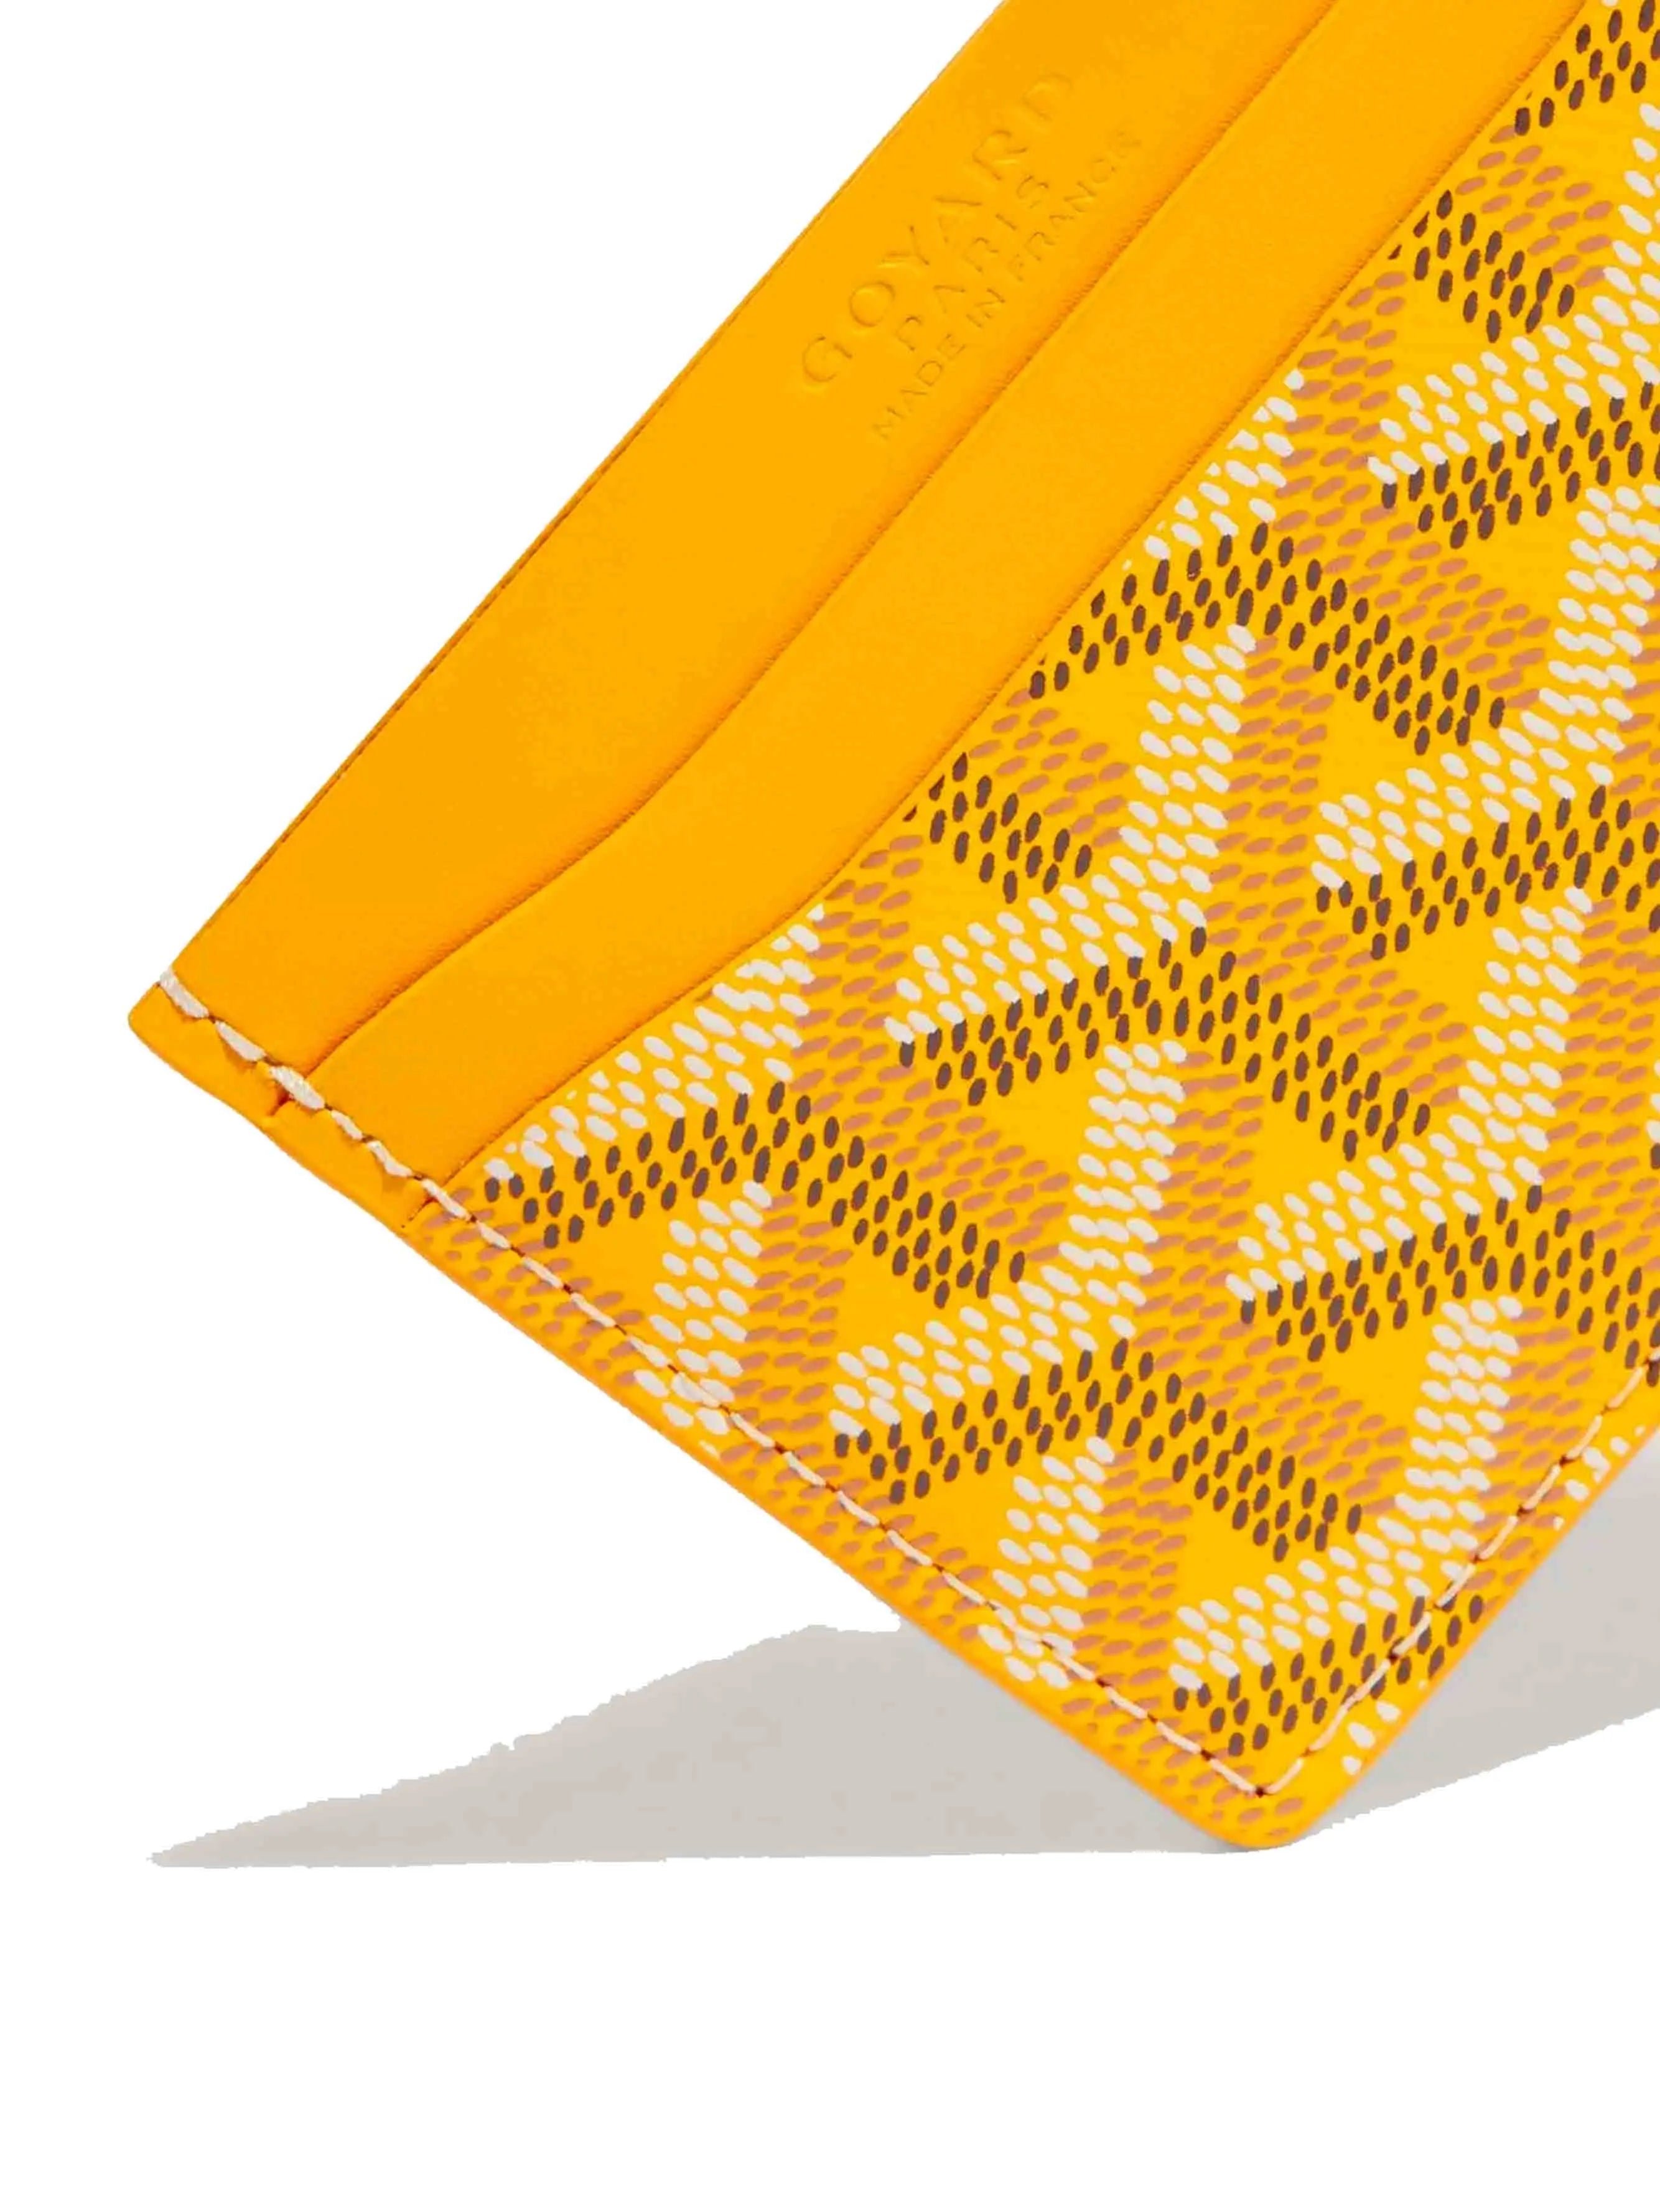 Saint pierre leather card wallet Goyard Yellow in Leather - 33062640